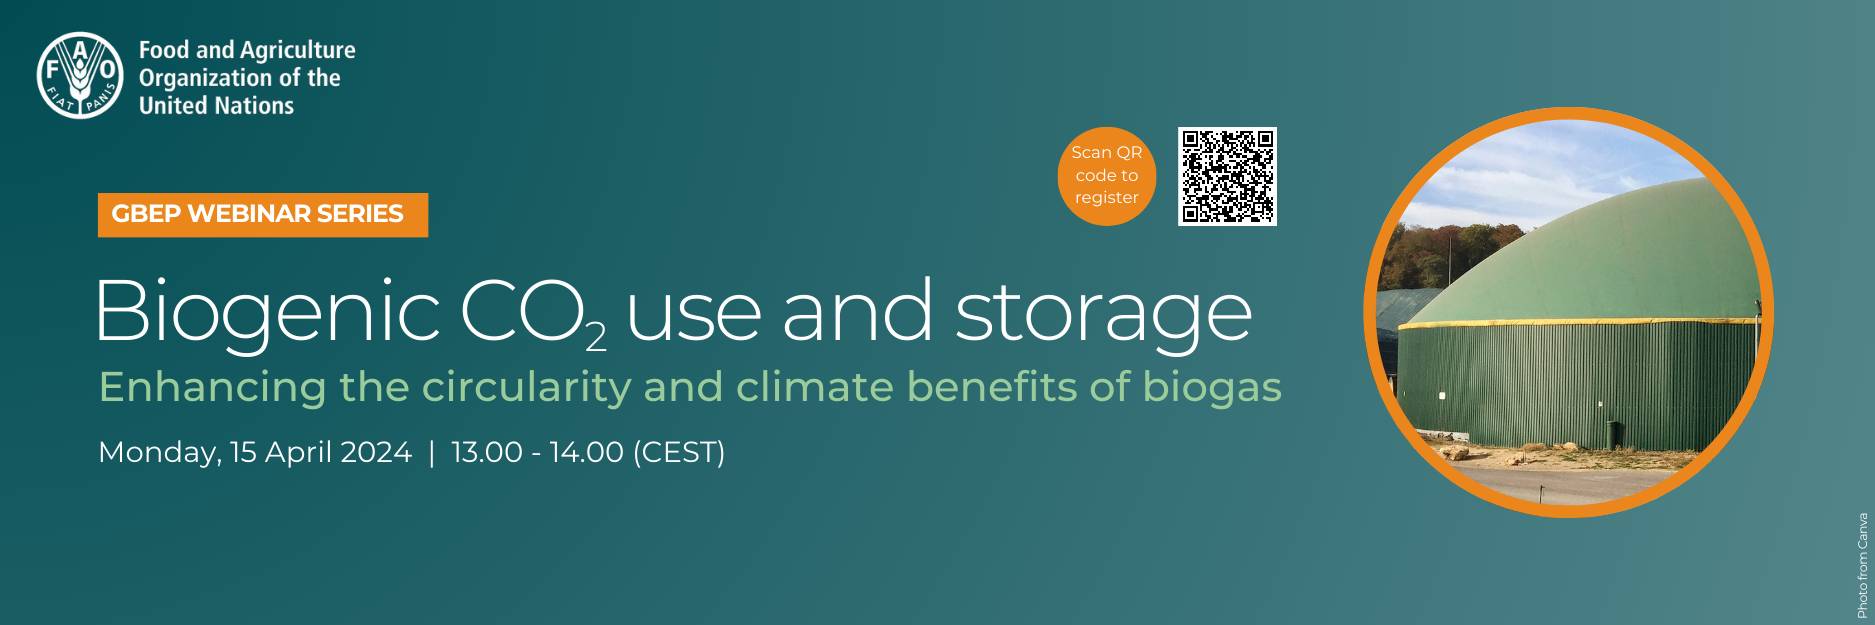 Biogenic CO2 use and storage webinar